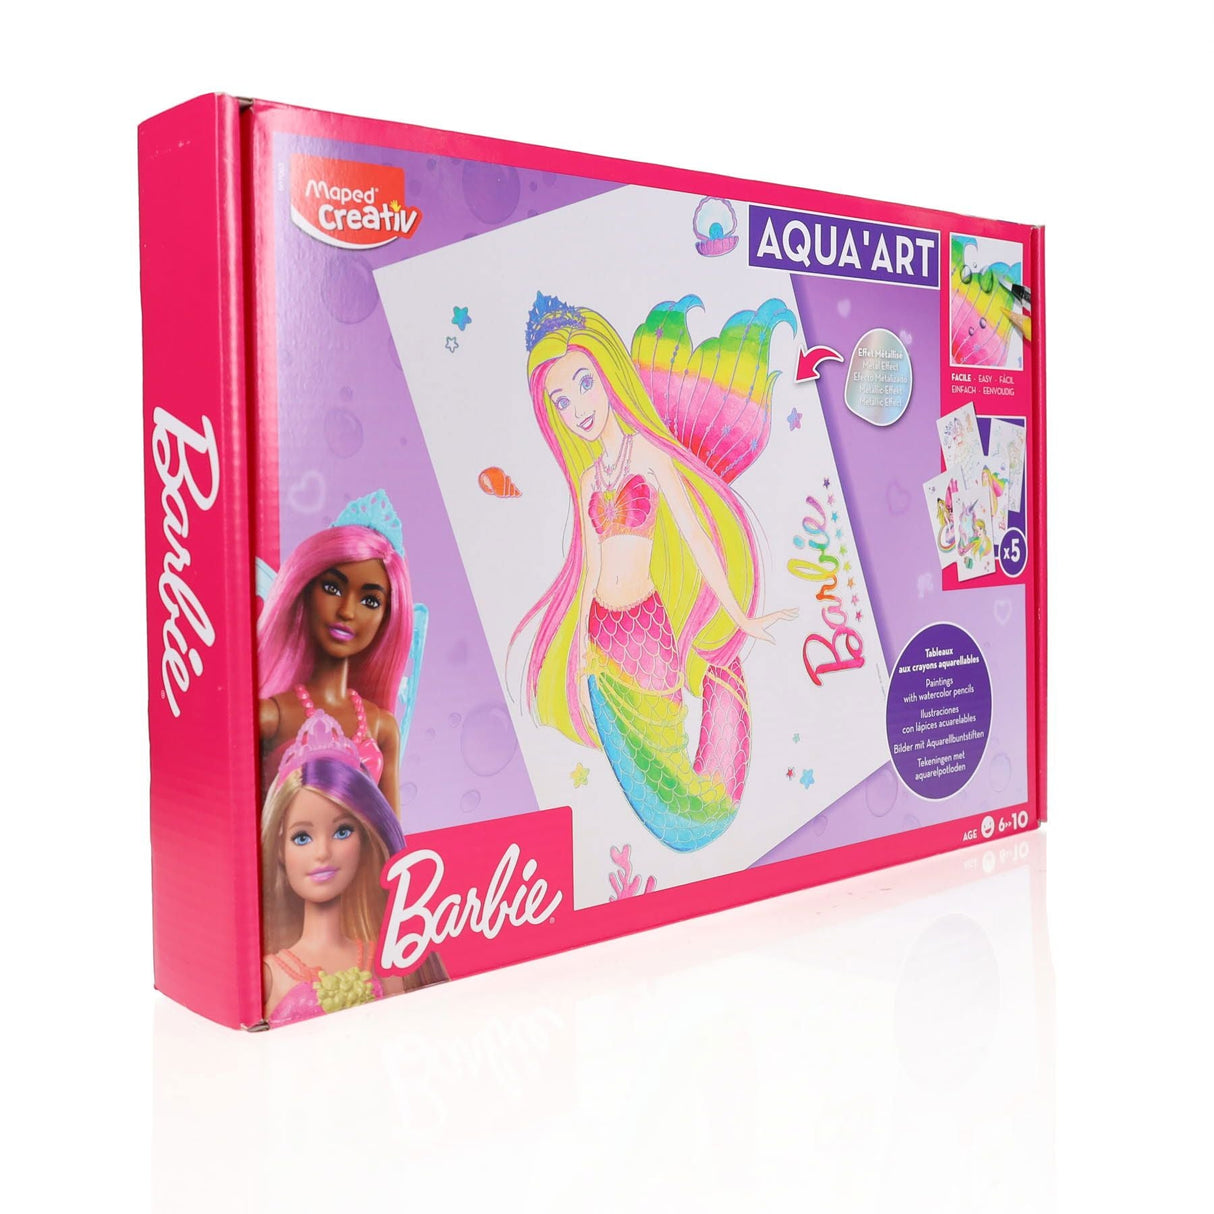 Maped Creativ Aqua Art - Barbie-Kids Art Sets-Maped|StationeryShop.co.uk